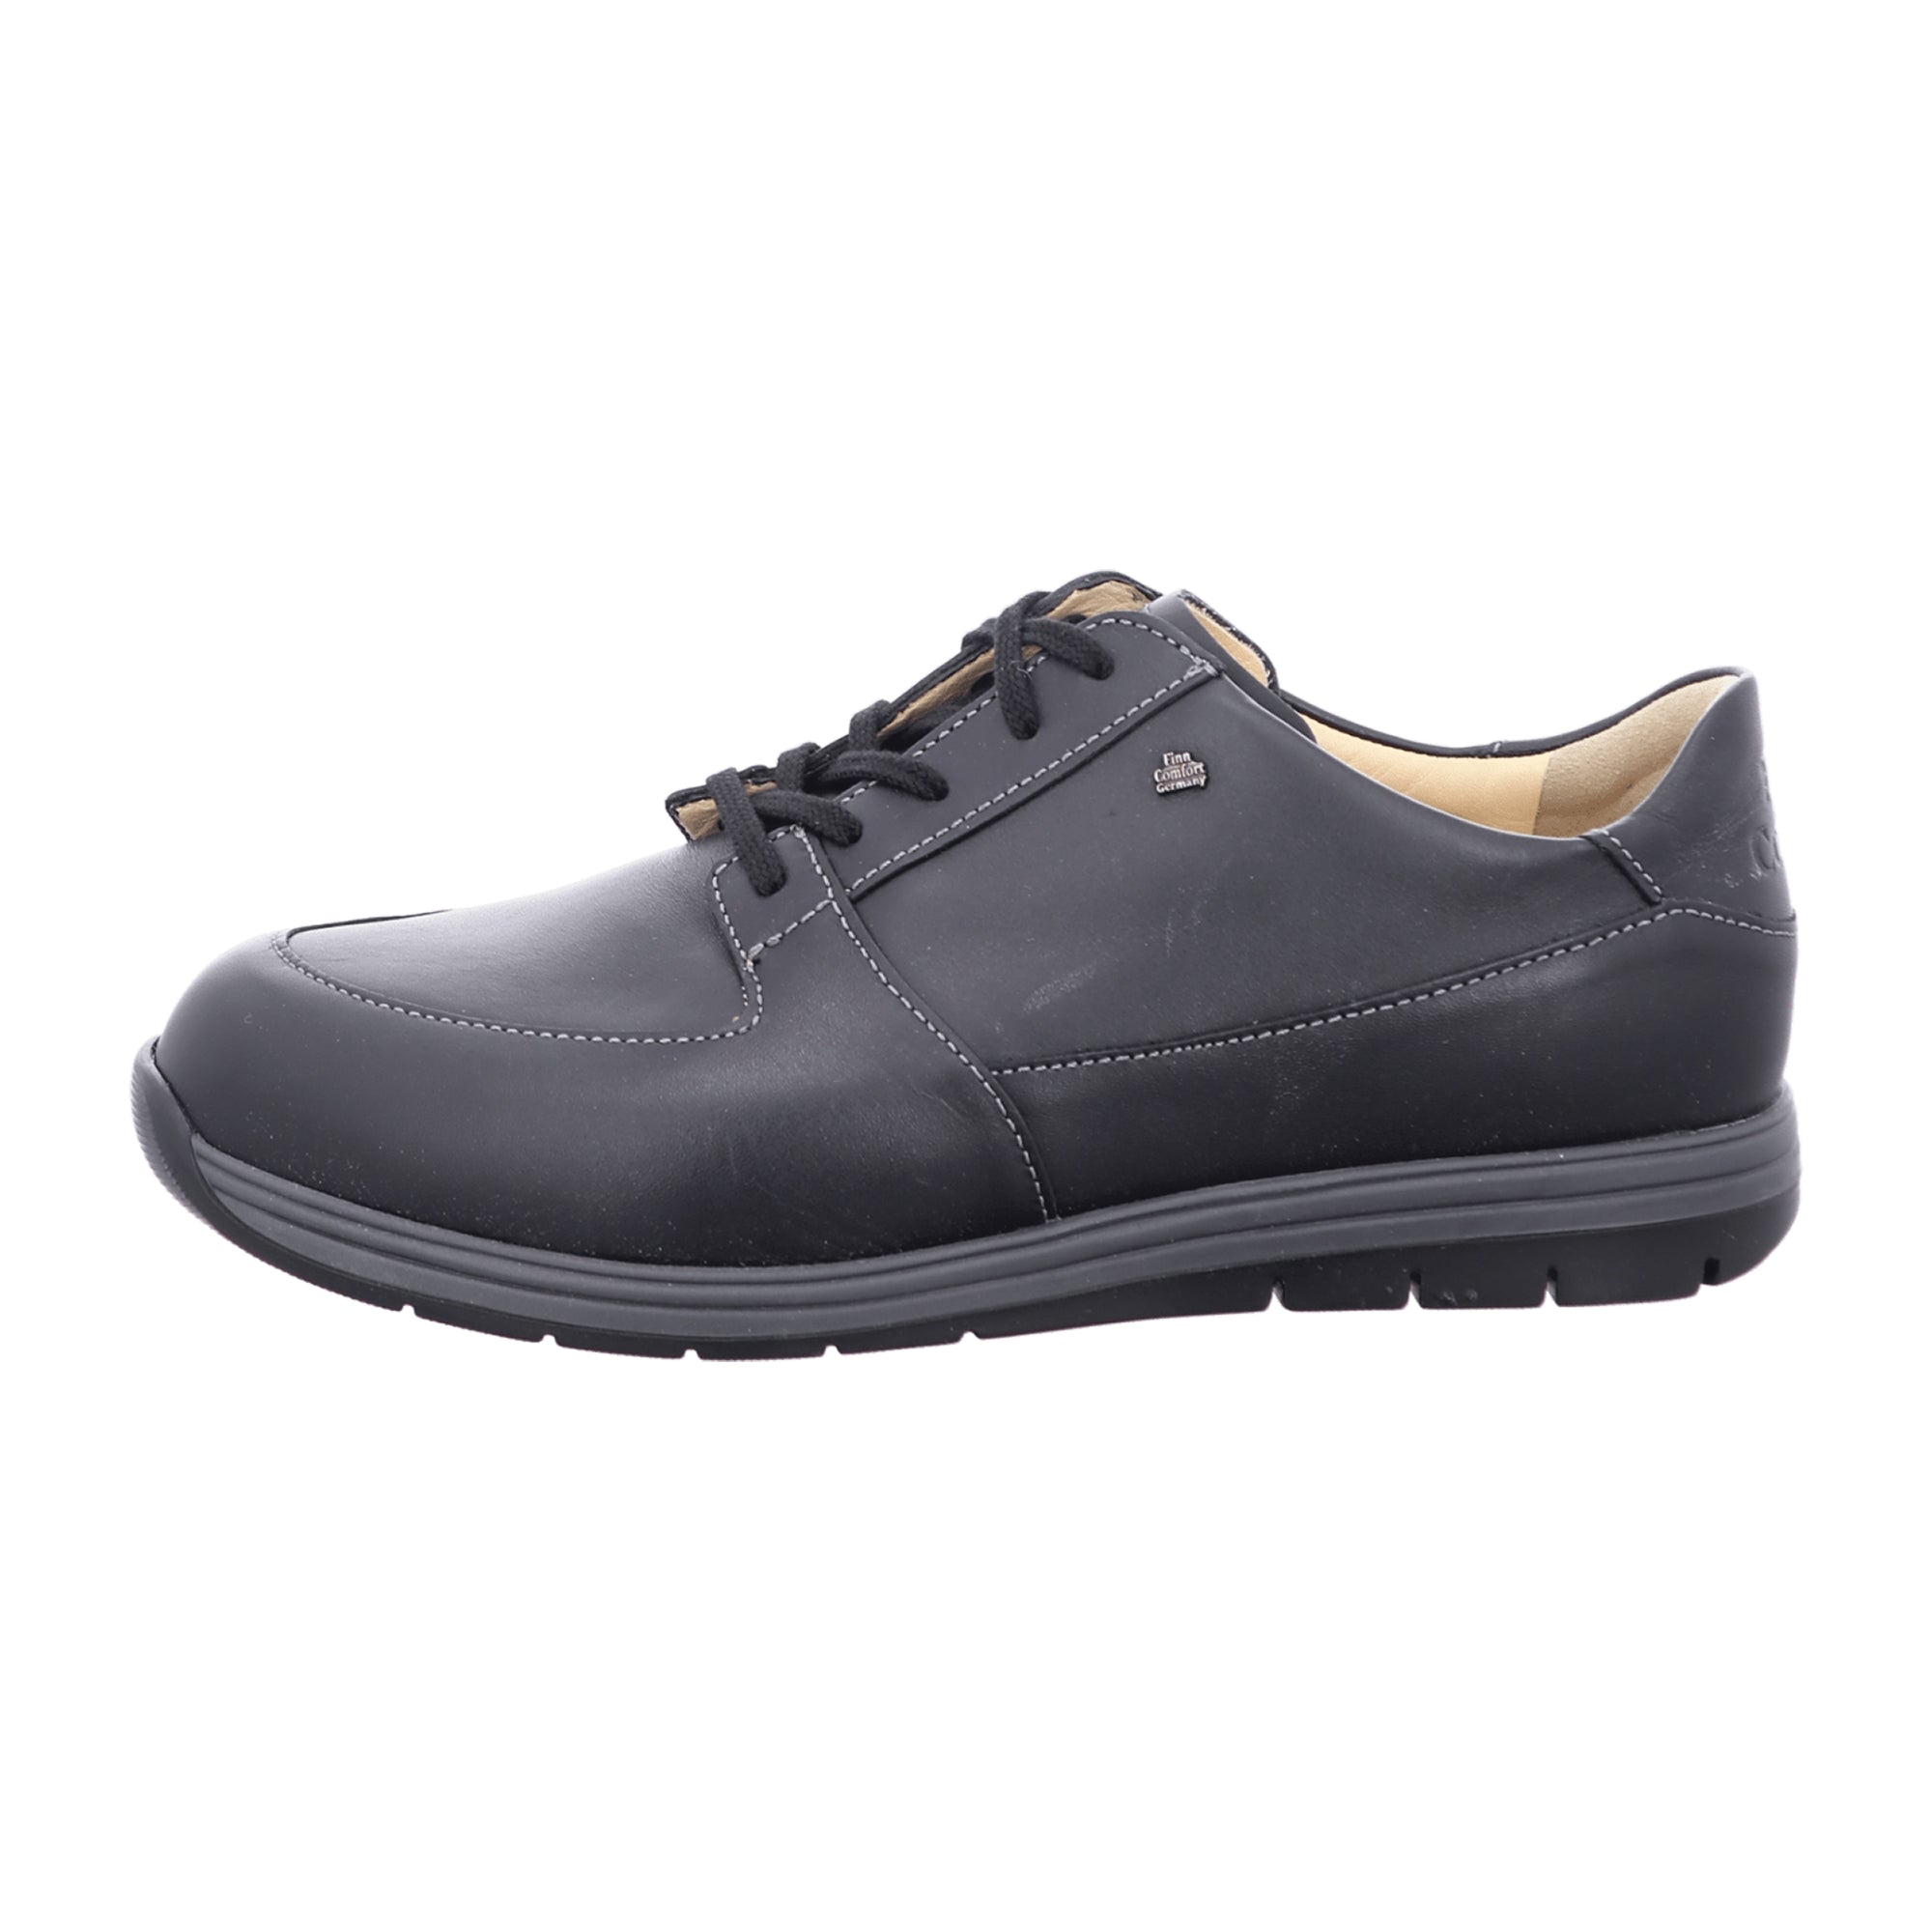 Finn Comfort Vernon Men's Comfortable Shoes - Stylish Black Leather